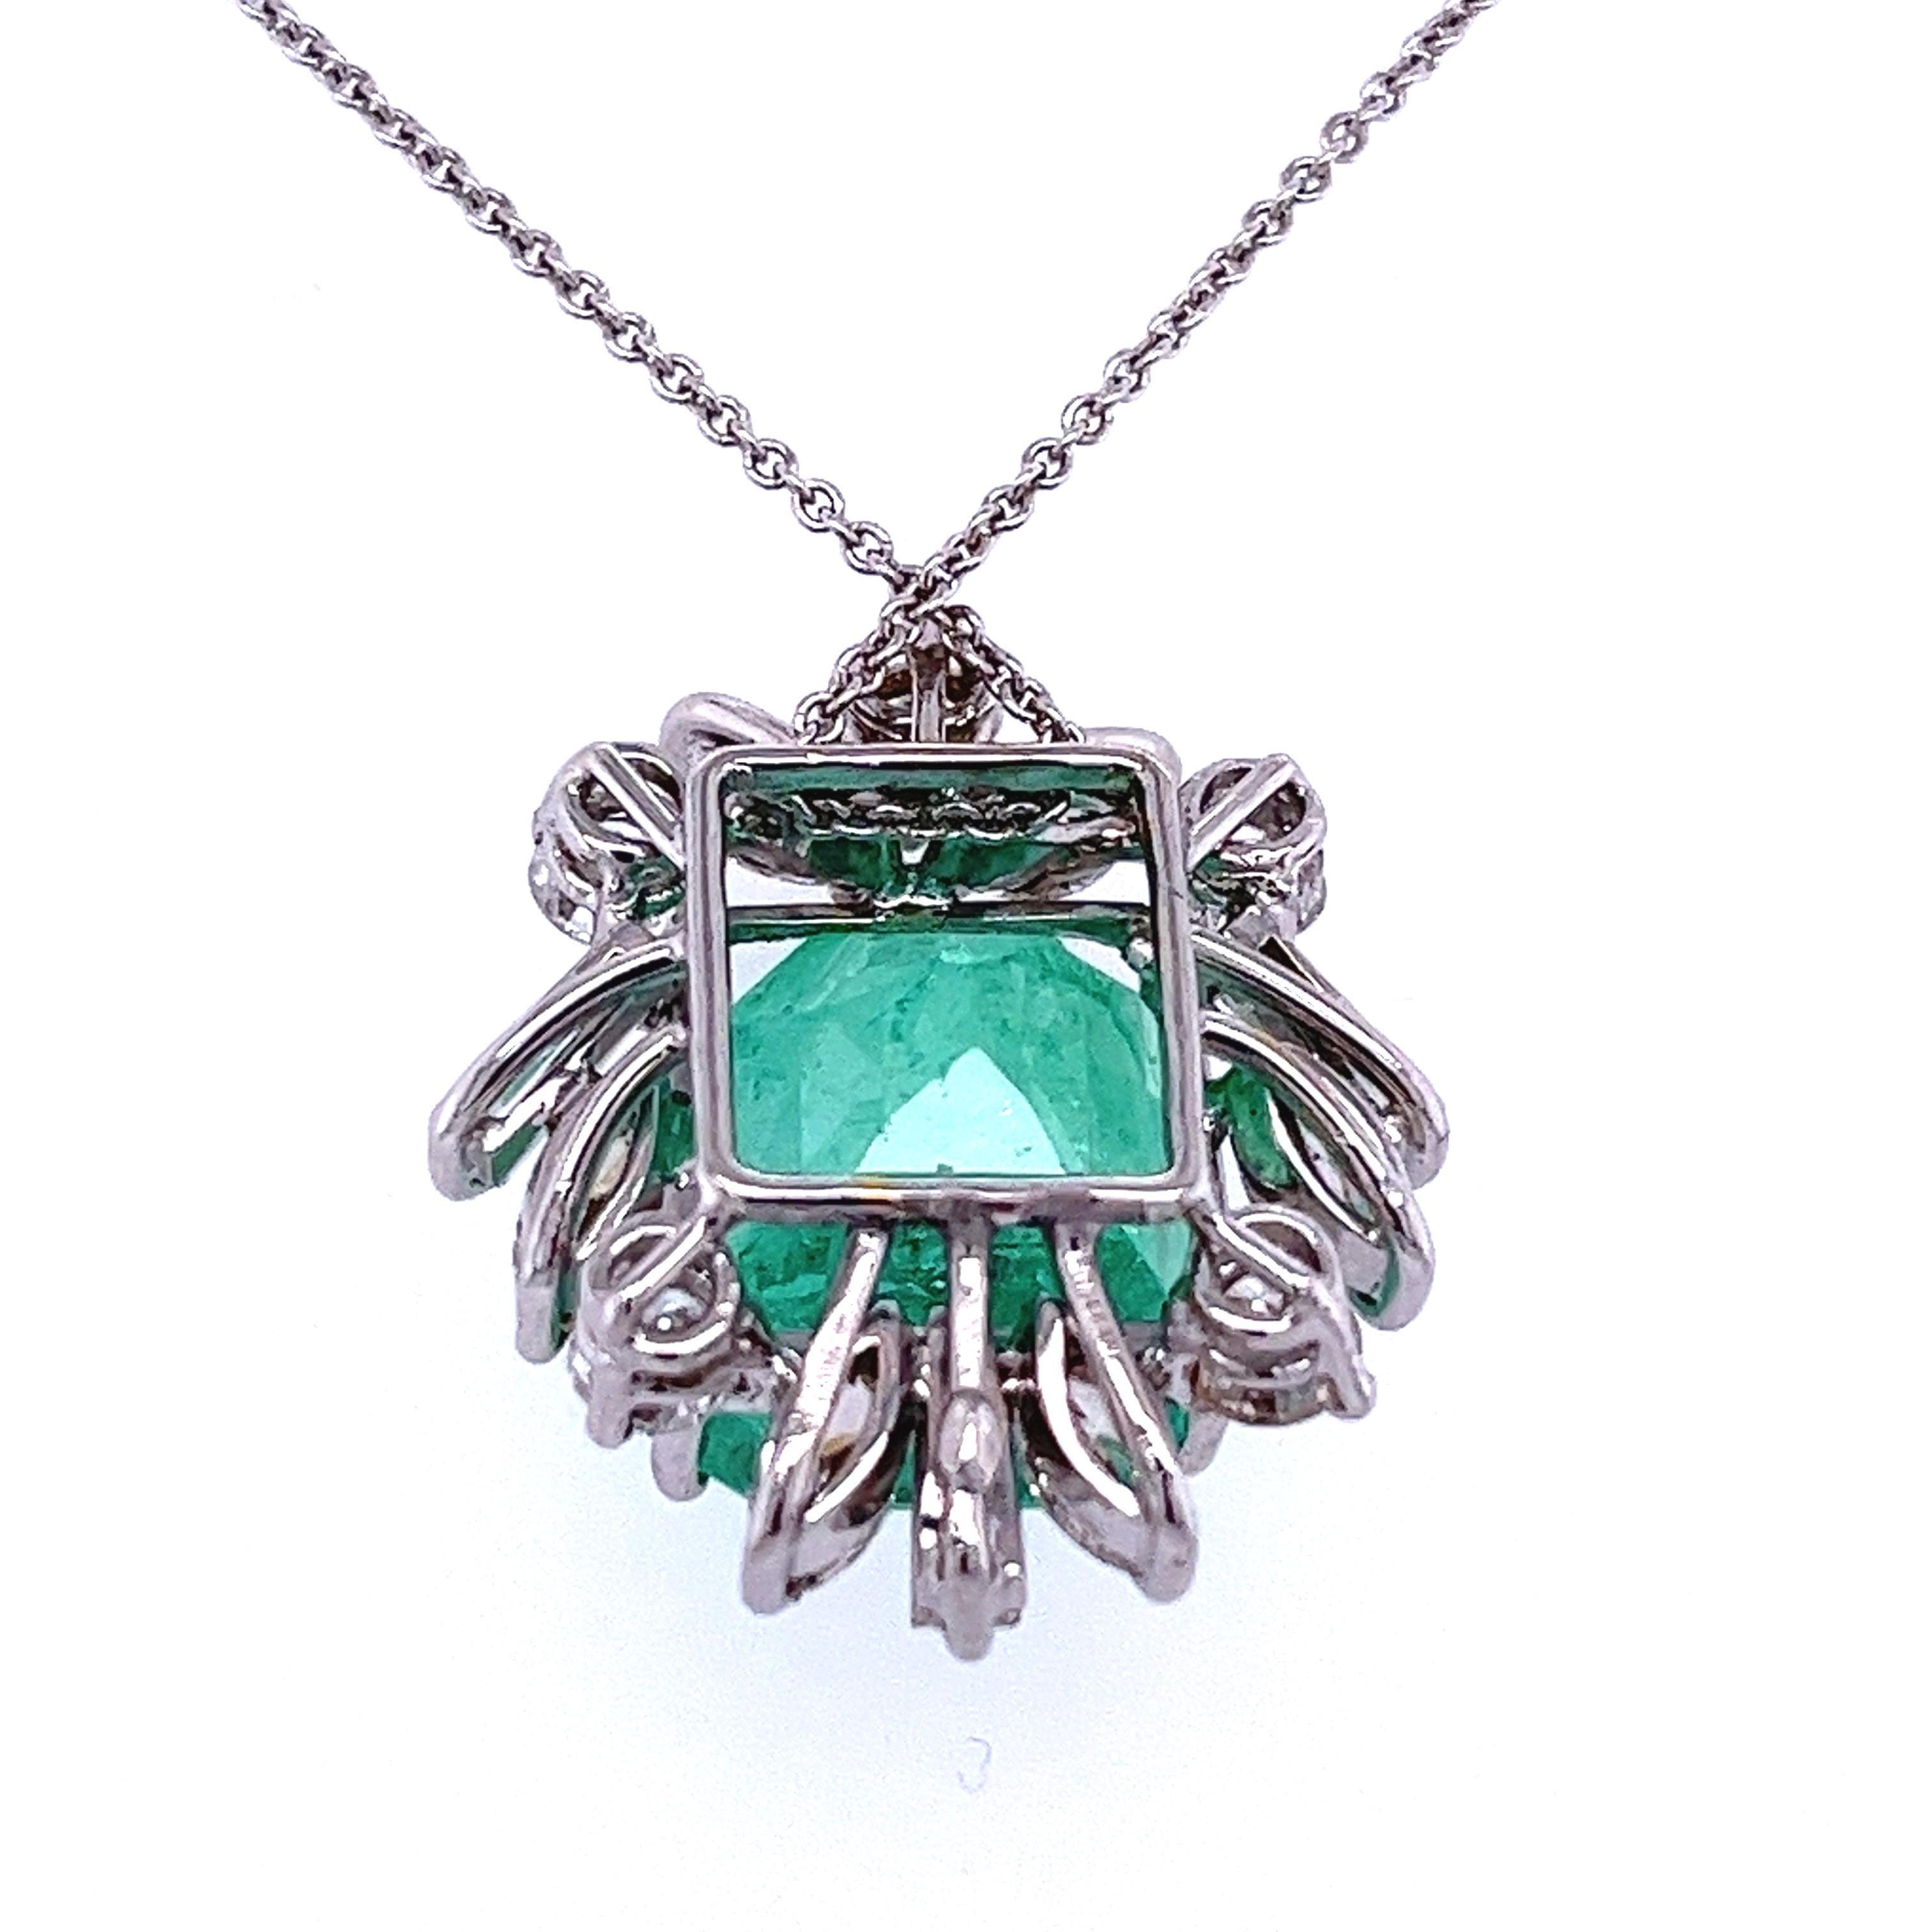 11.54 Carat Colombian Emerald and Baguette Cut Diamonds Pendant Set in Platinum 6